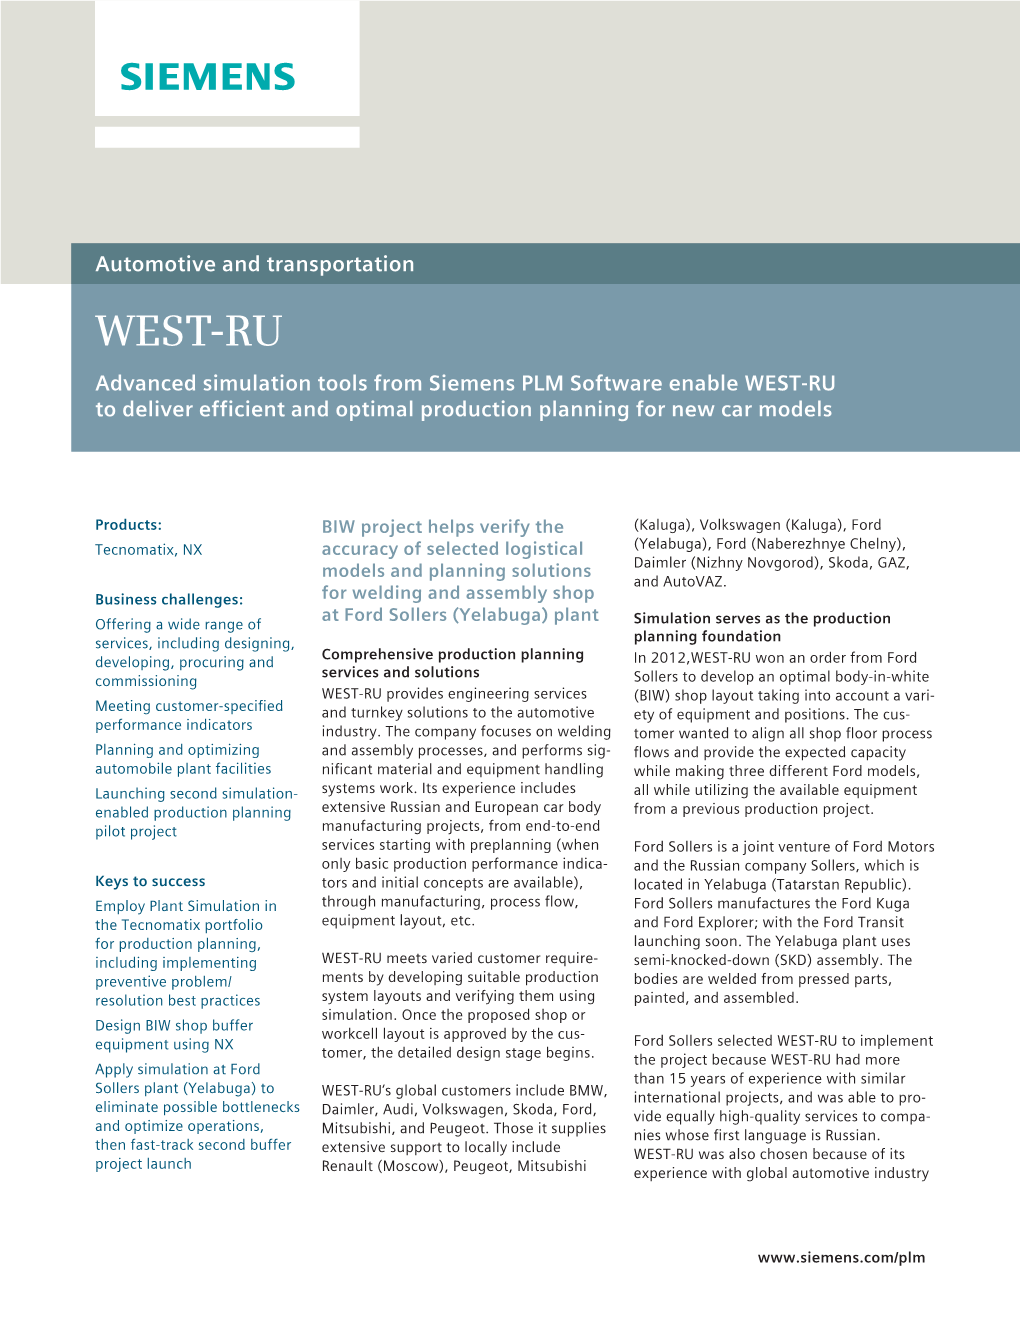 Siemens PLM WEST-RU Case Study